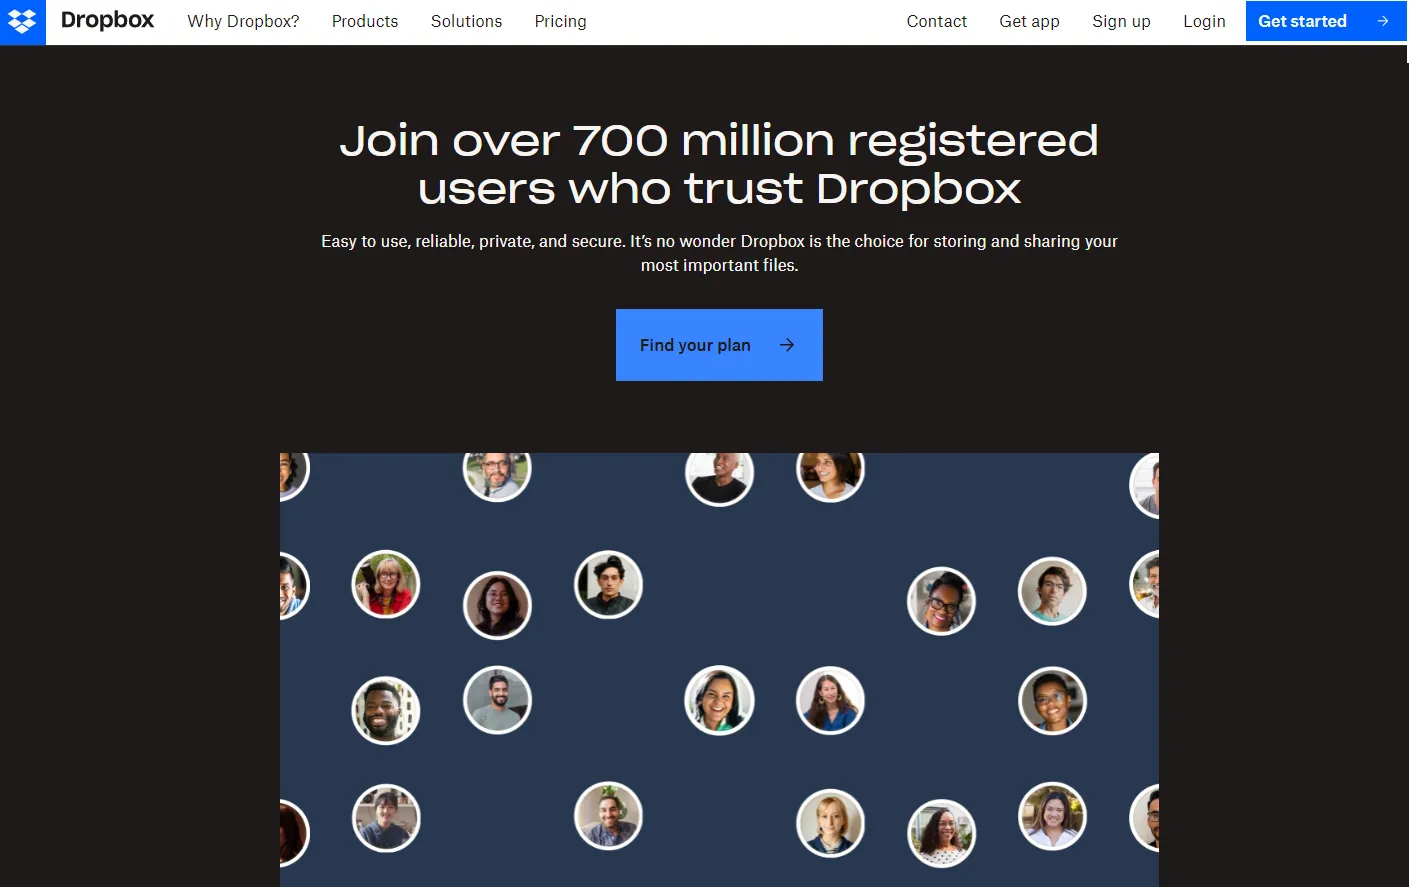 Visit the official Dropbox website